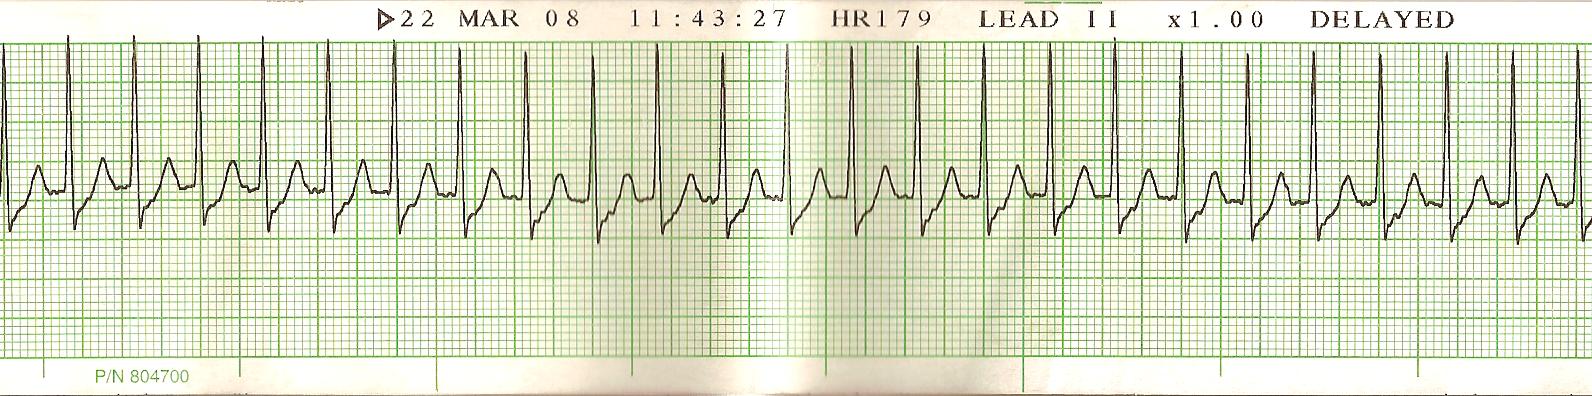 	
Lead II (2) Supraventricular tachycardia SVT 